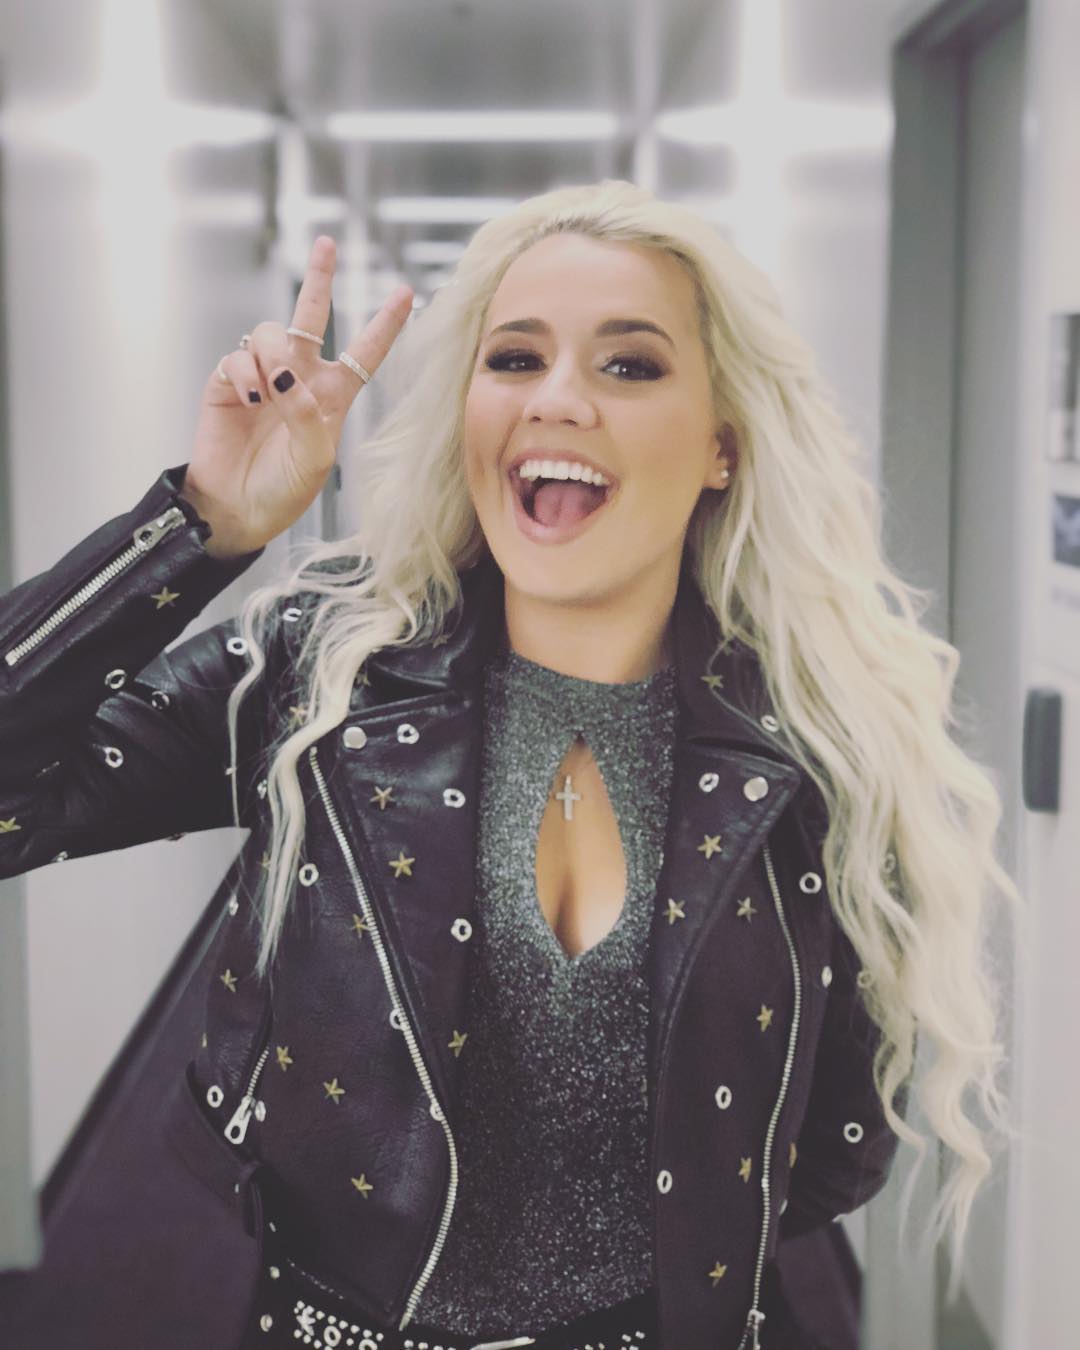 Gabby Barrett backstage at American Idol on April 29, 2018.
Photo credit: Dean Banowetz
